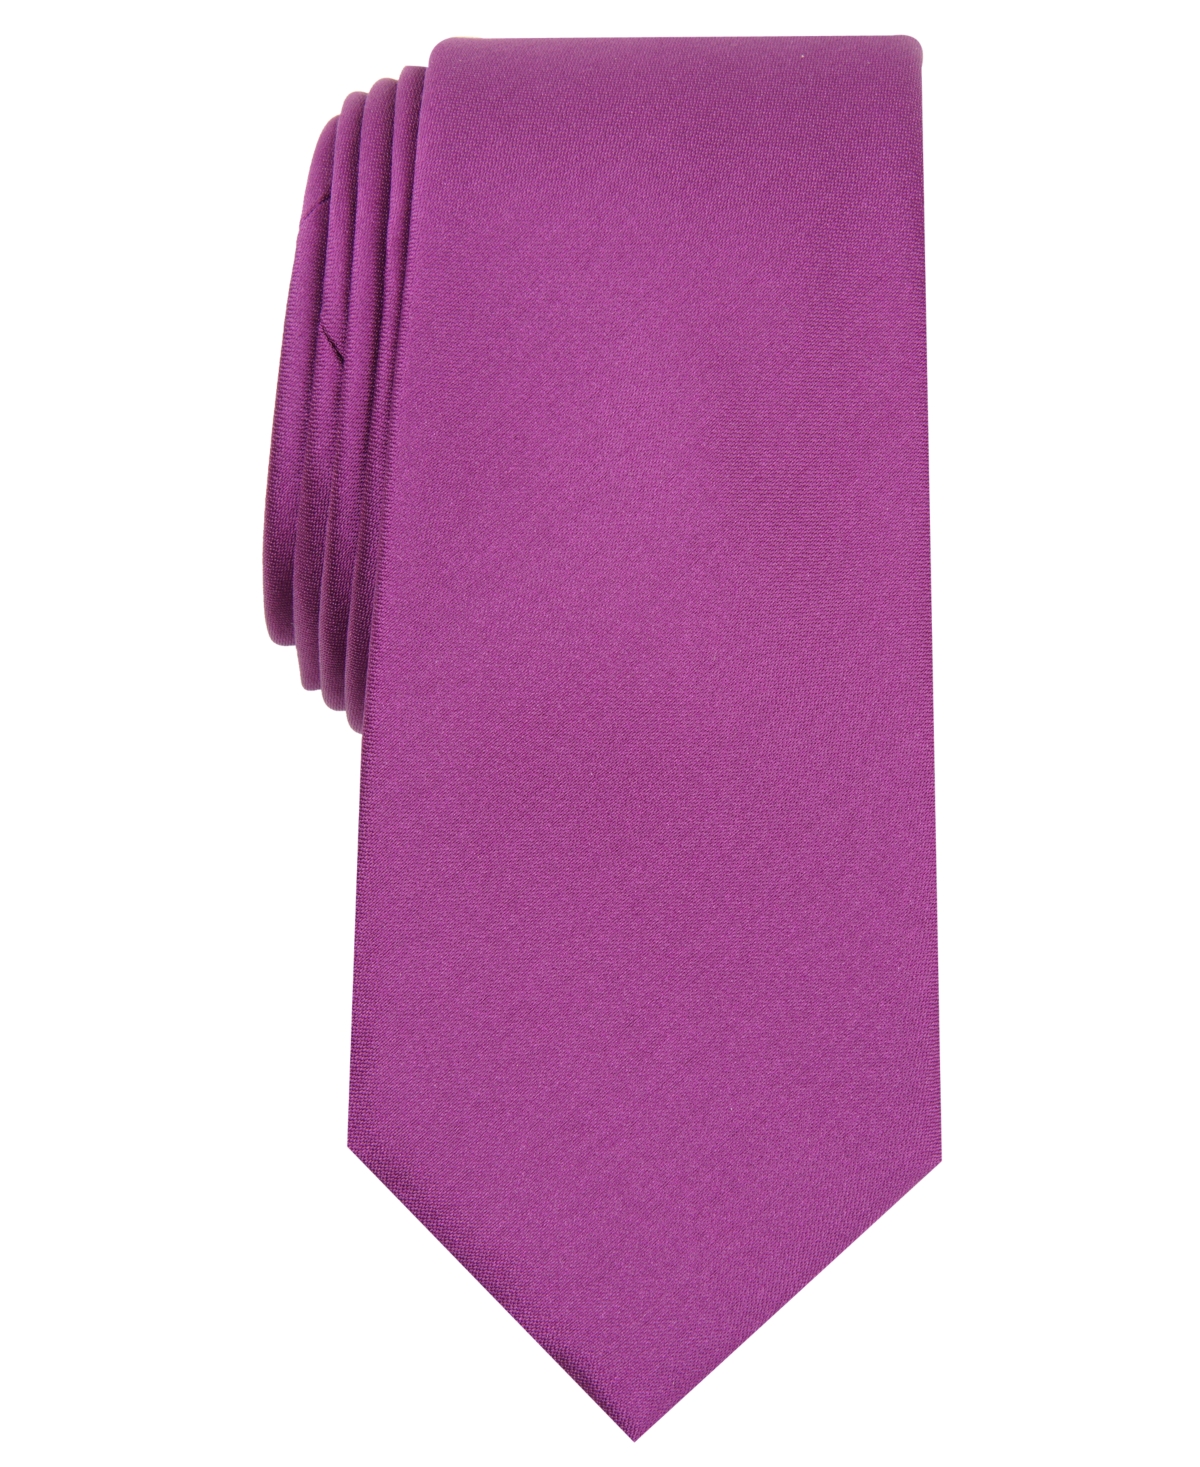 Men's Solid Texture Slim Tie, Created for Macy's - Berry